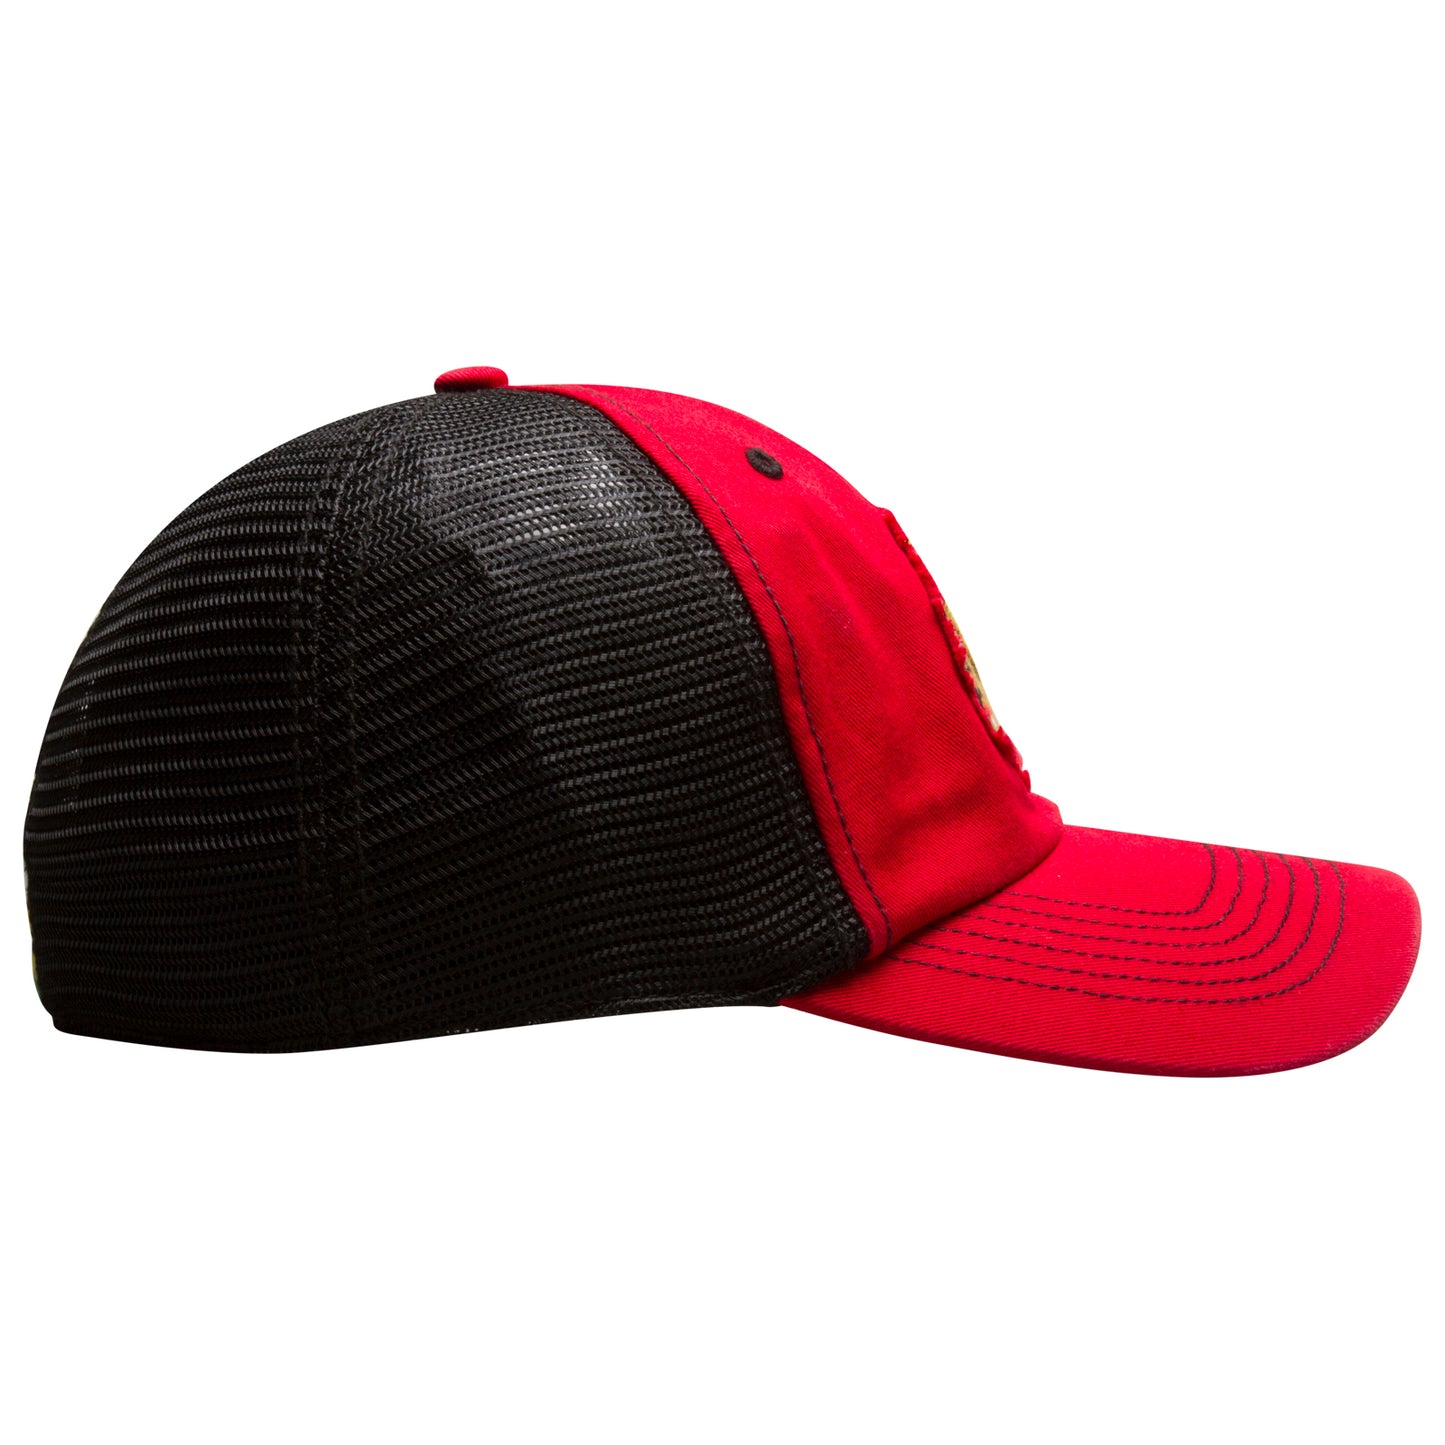 Chicago Blackhawks Red and Black Primary Logo Mesh Back Flex Fit Hat